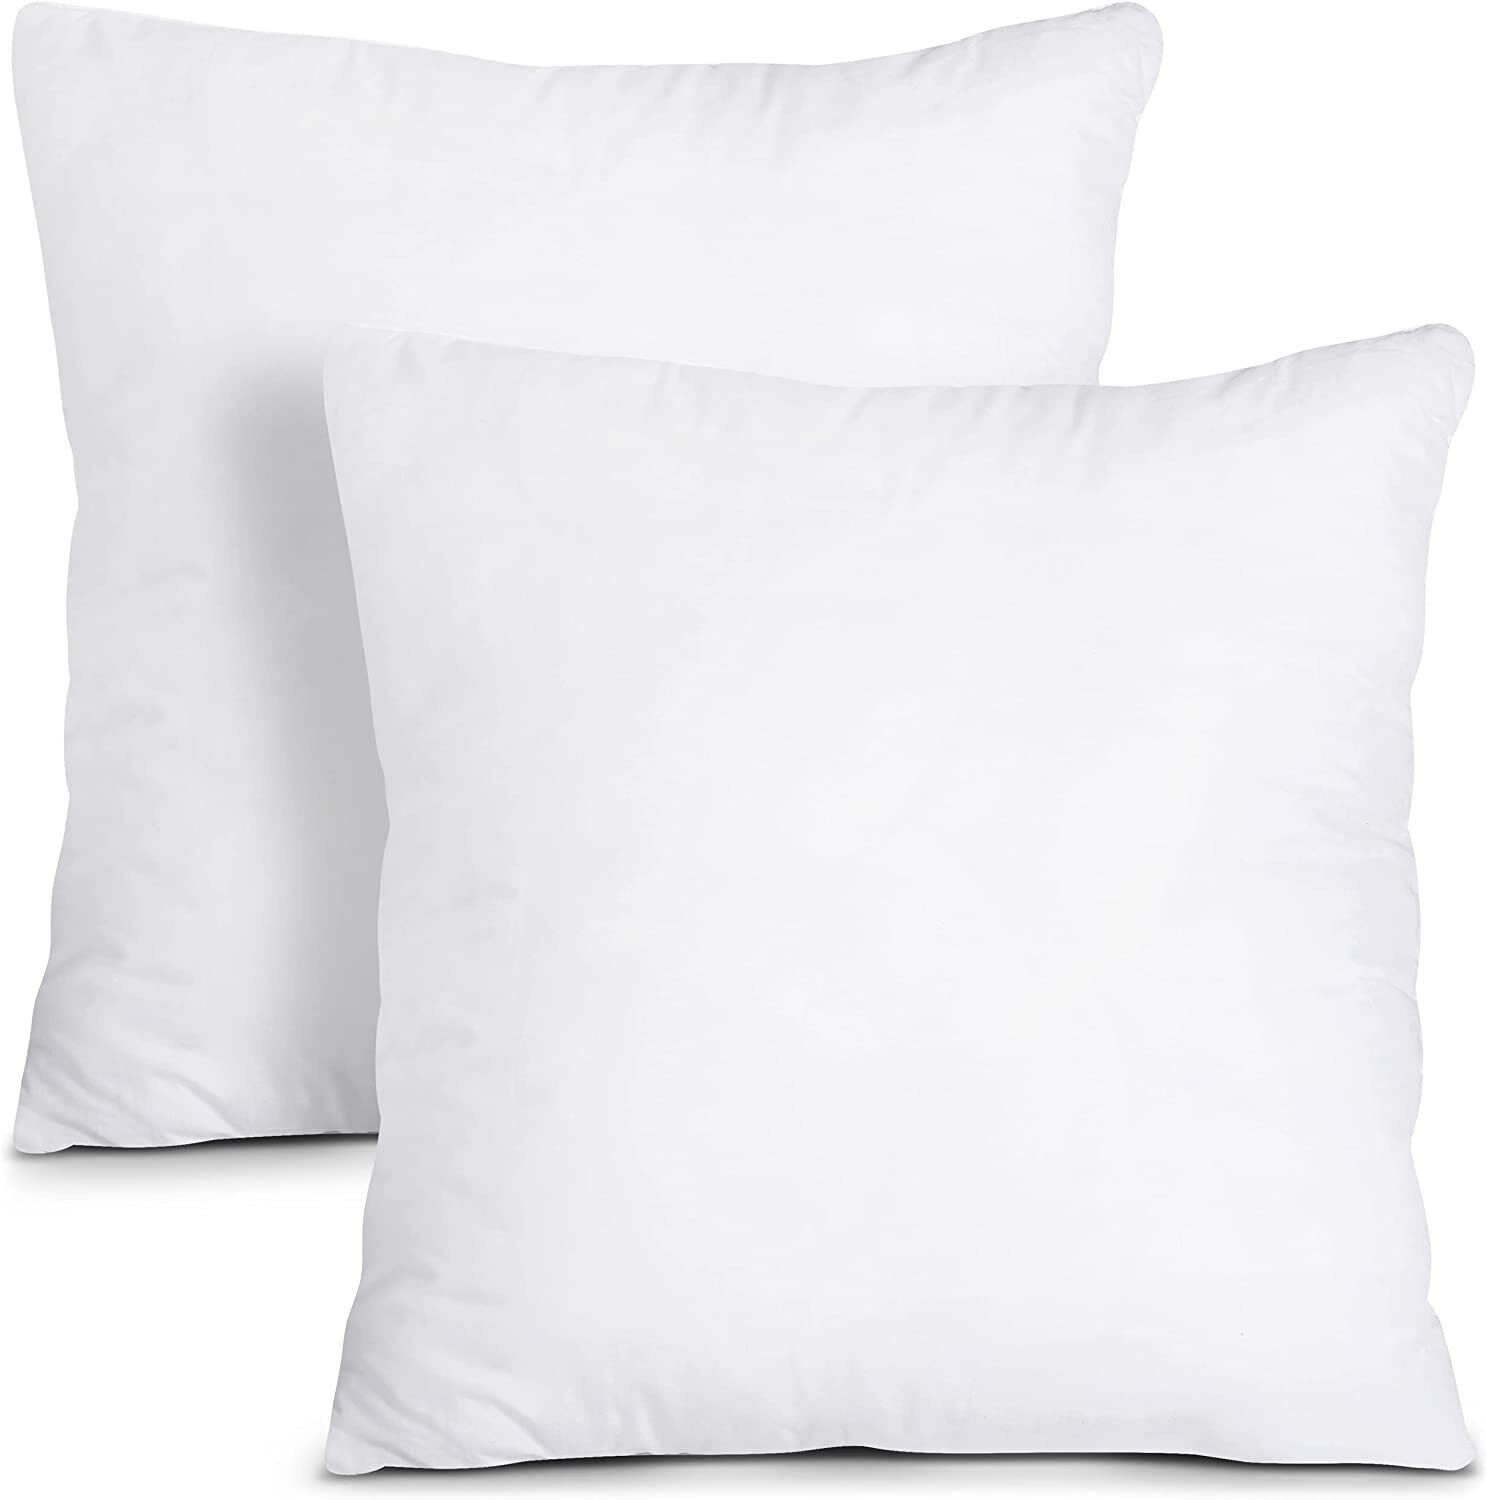 Throw Pillows Insert Pack of 2 Decorative Pillows Bed Pillows Utopia Bedding